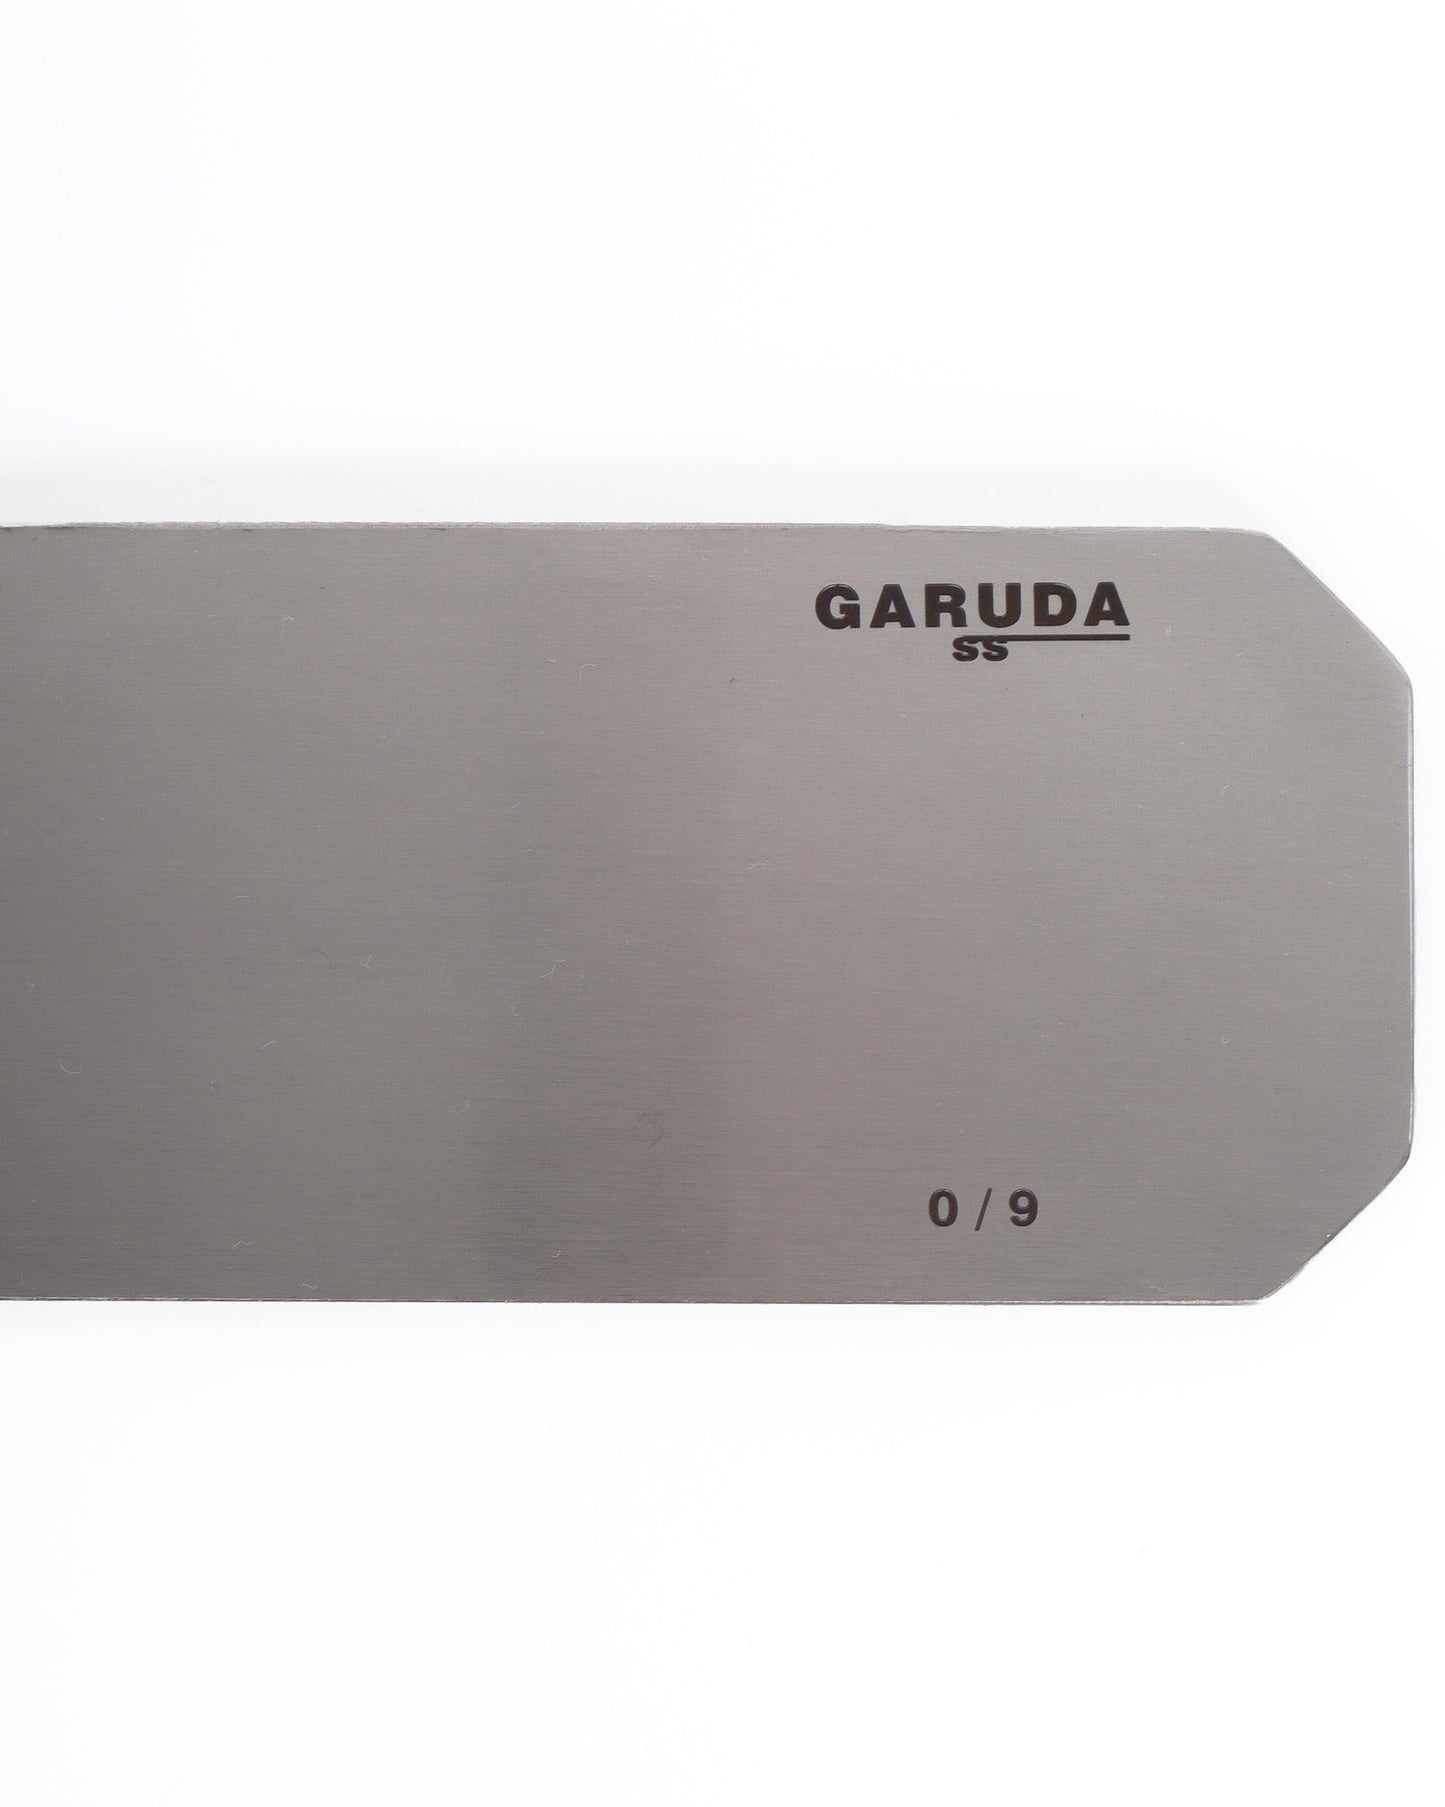 Incense Holder V1 - Limited Edition - GARUDA